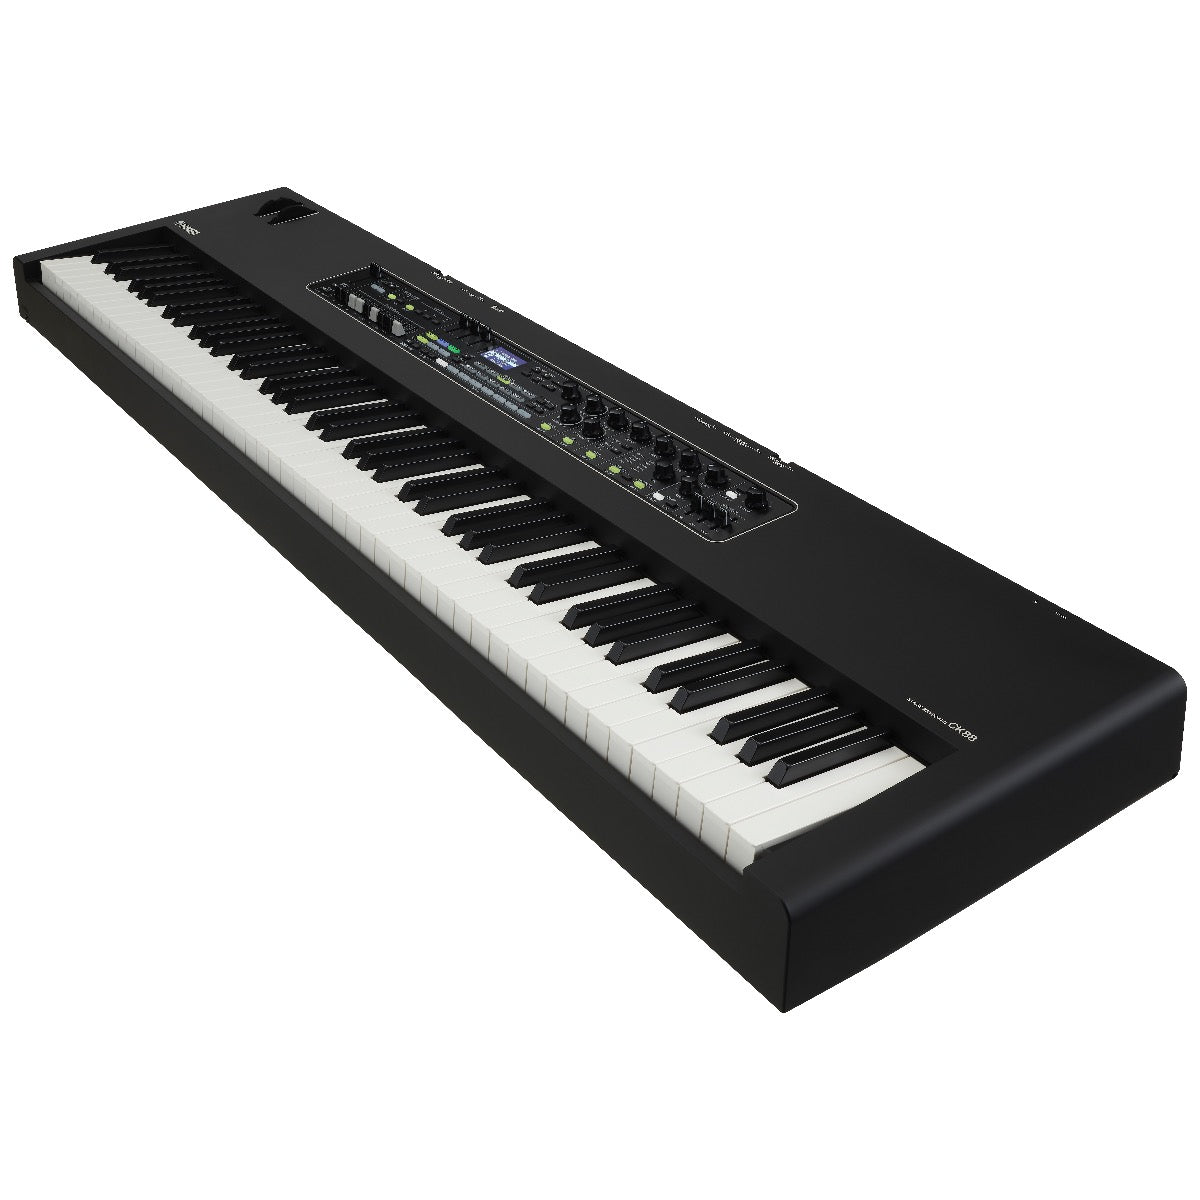 Yamaha CK88 Stage Keyboard - View 12